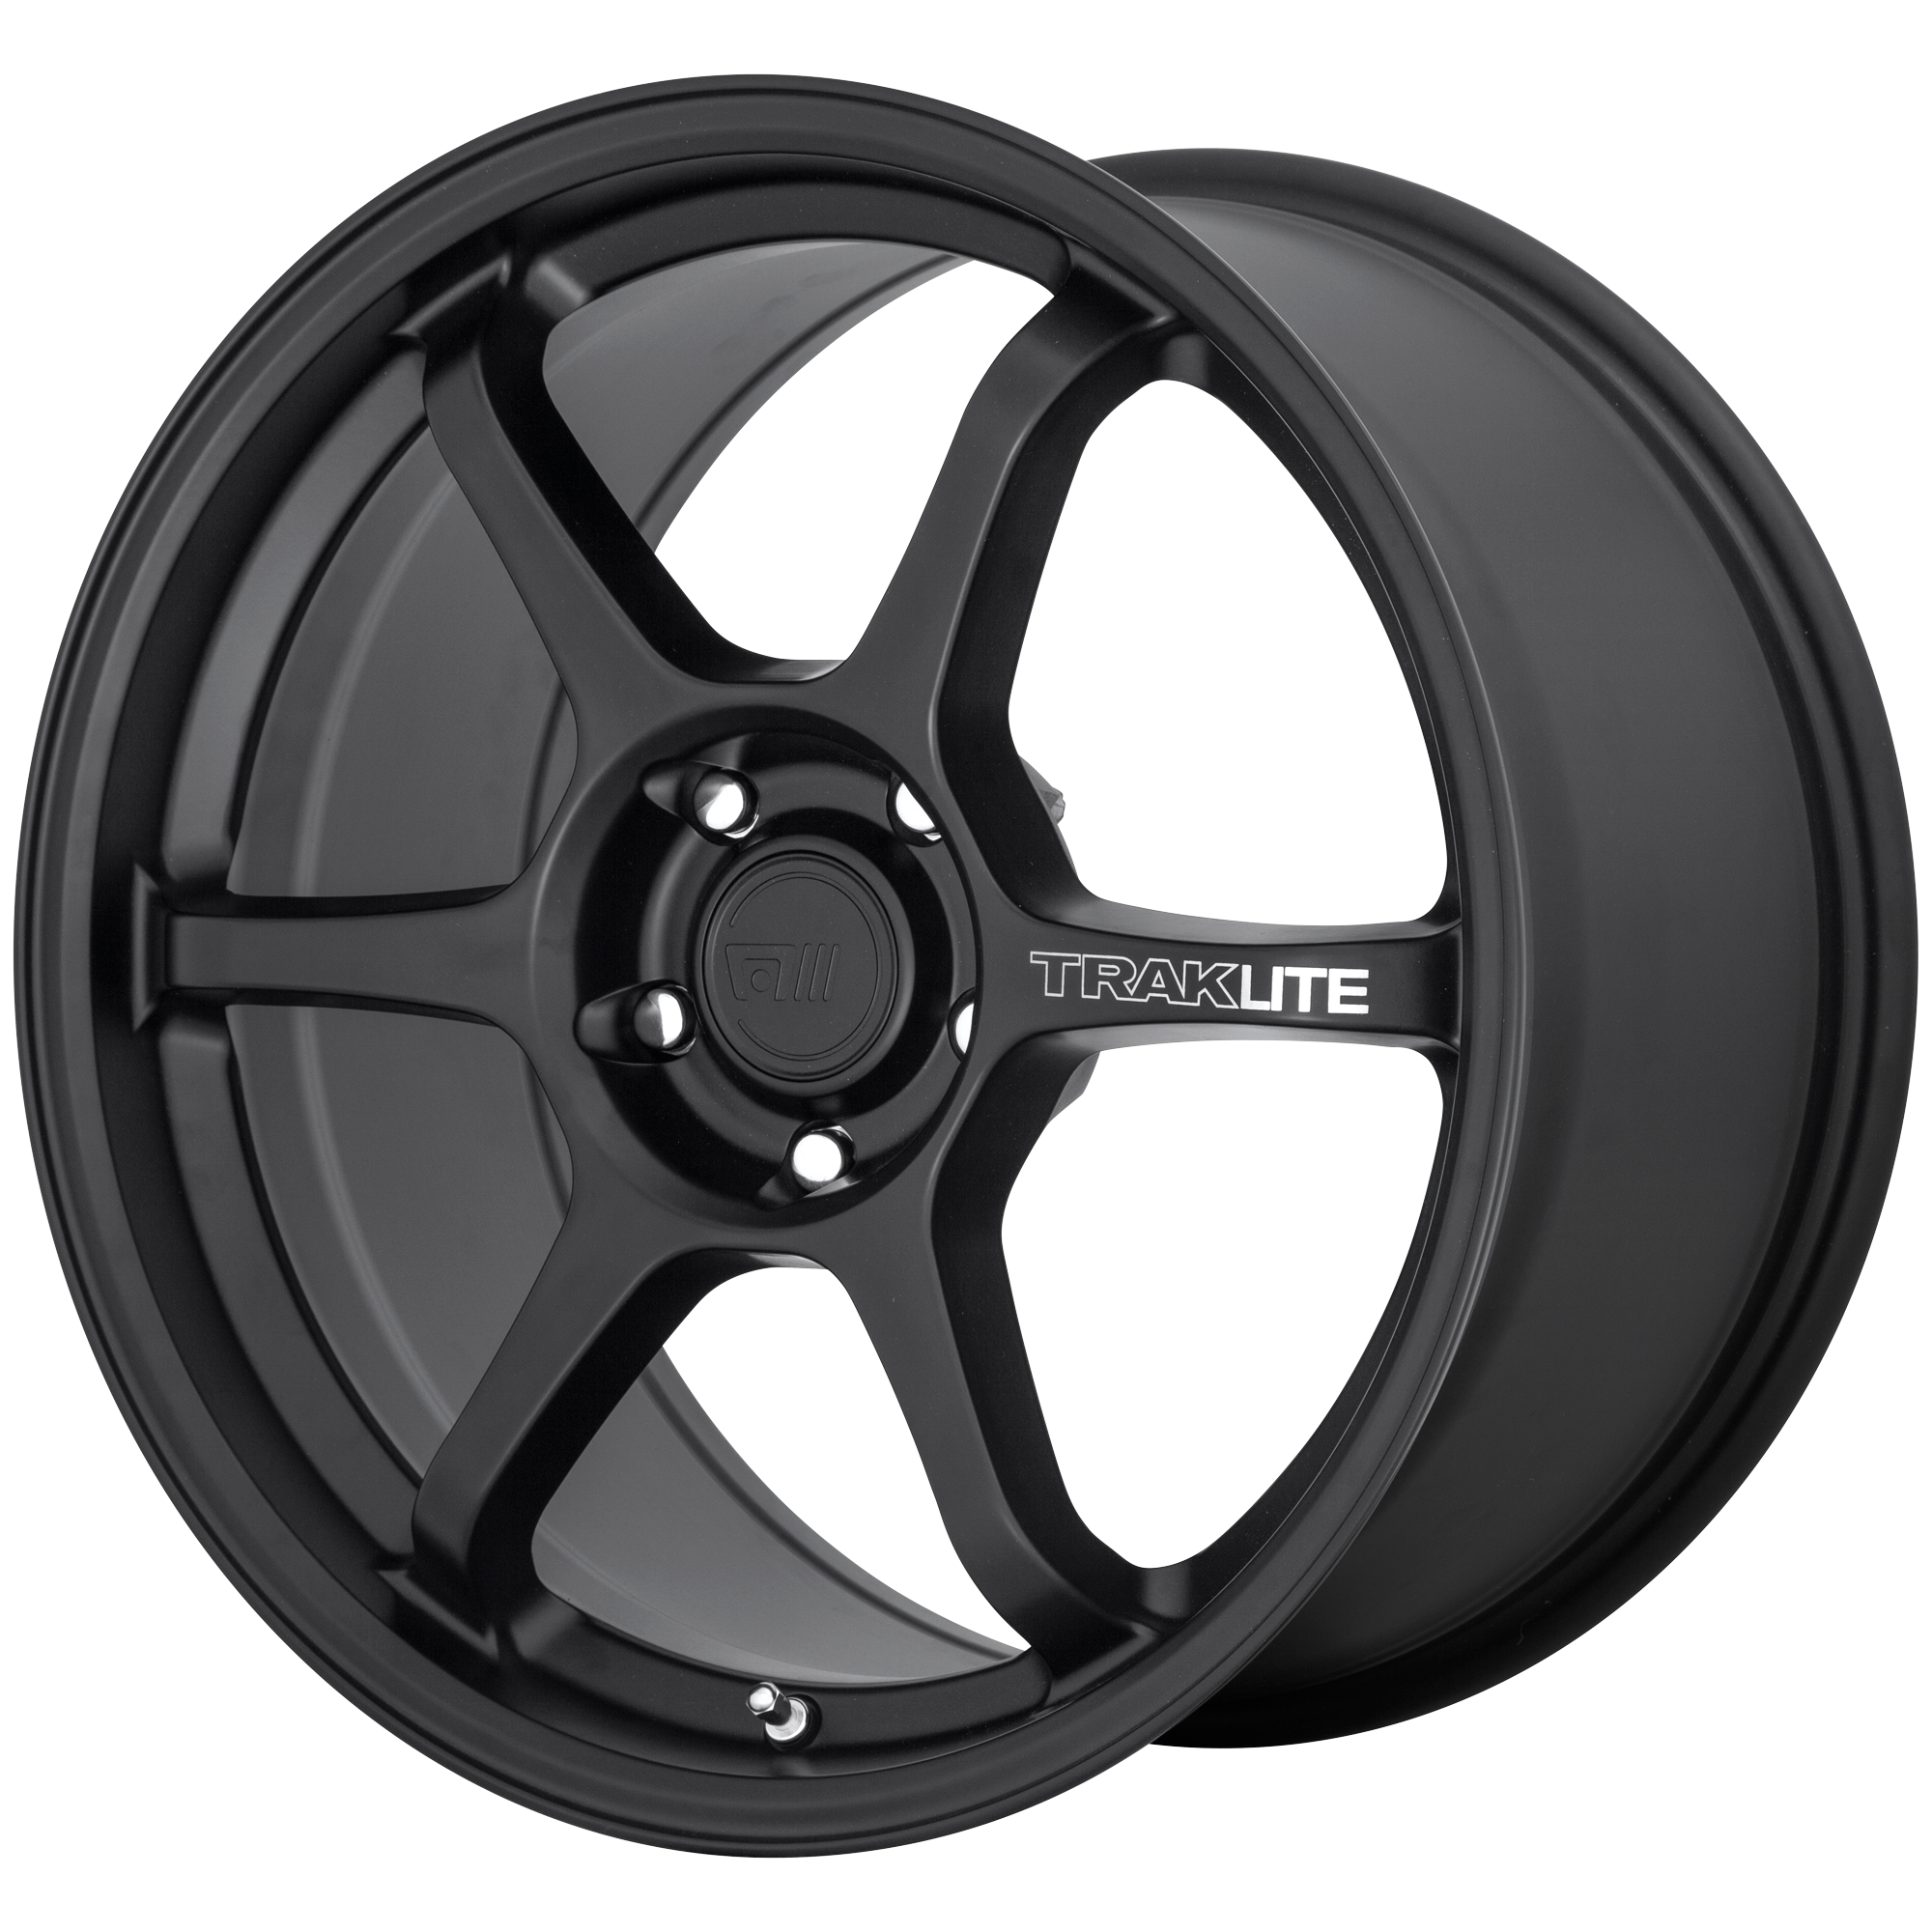 TRAKLITE 3.0 17x8.5 5x114.30 SATIN BLACK (35 mm) - Tires and Engine Performance